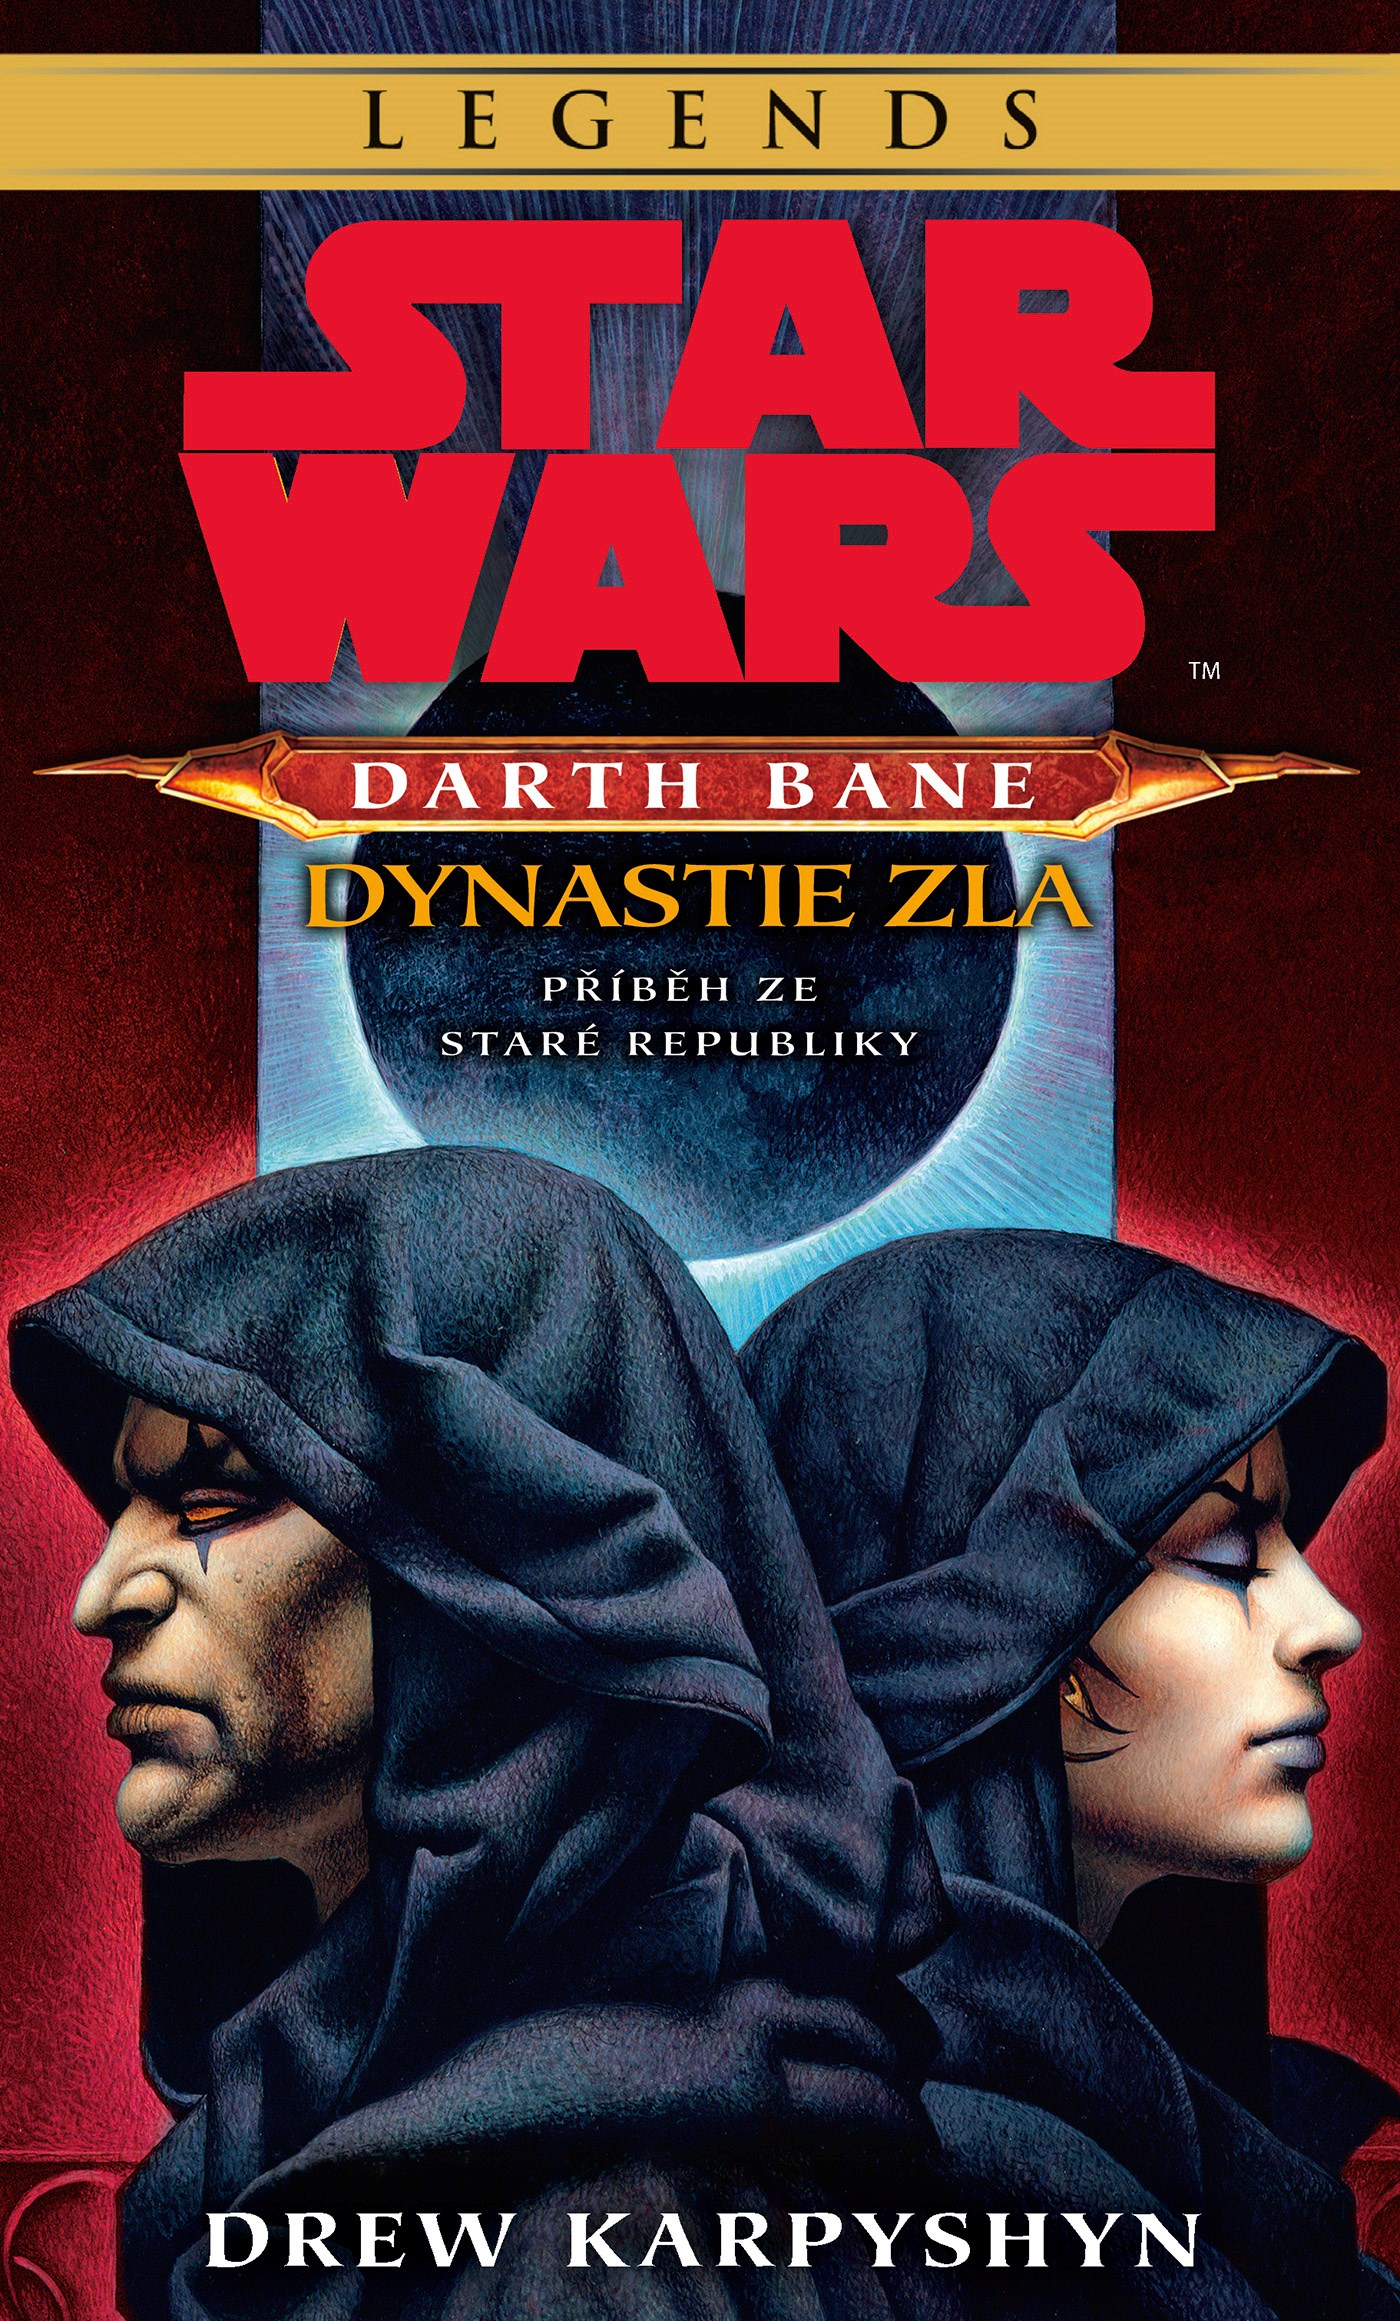 Karpyshyn D.- Star Wars Legends - Darth Bane 3 - Dynastie zla